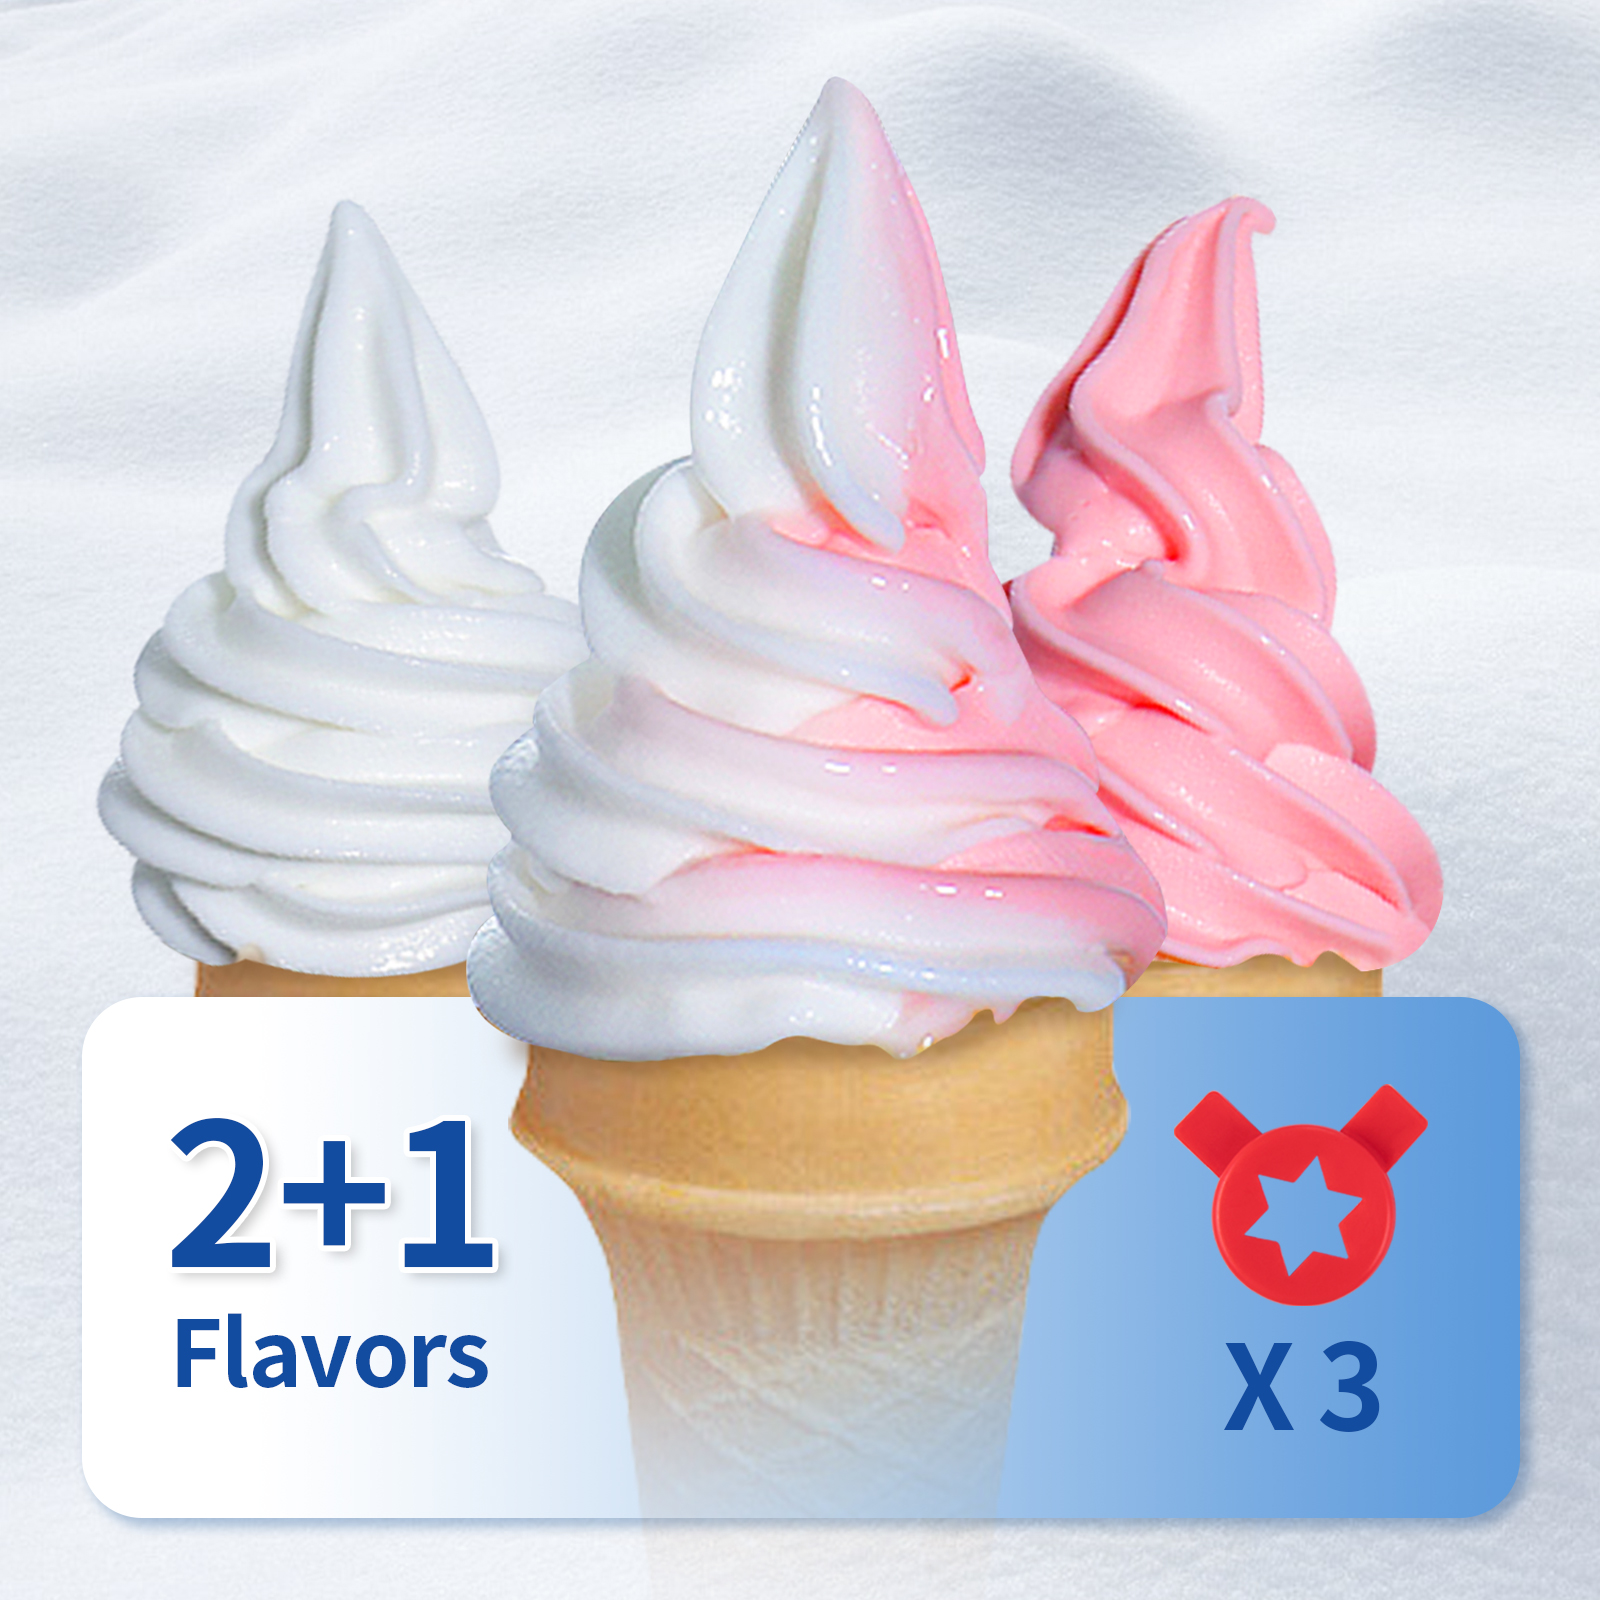 VEVOR Countertop Soft Serve Ice Cream Maker 22-30L/H 2200W Frozen Yogurt Machine